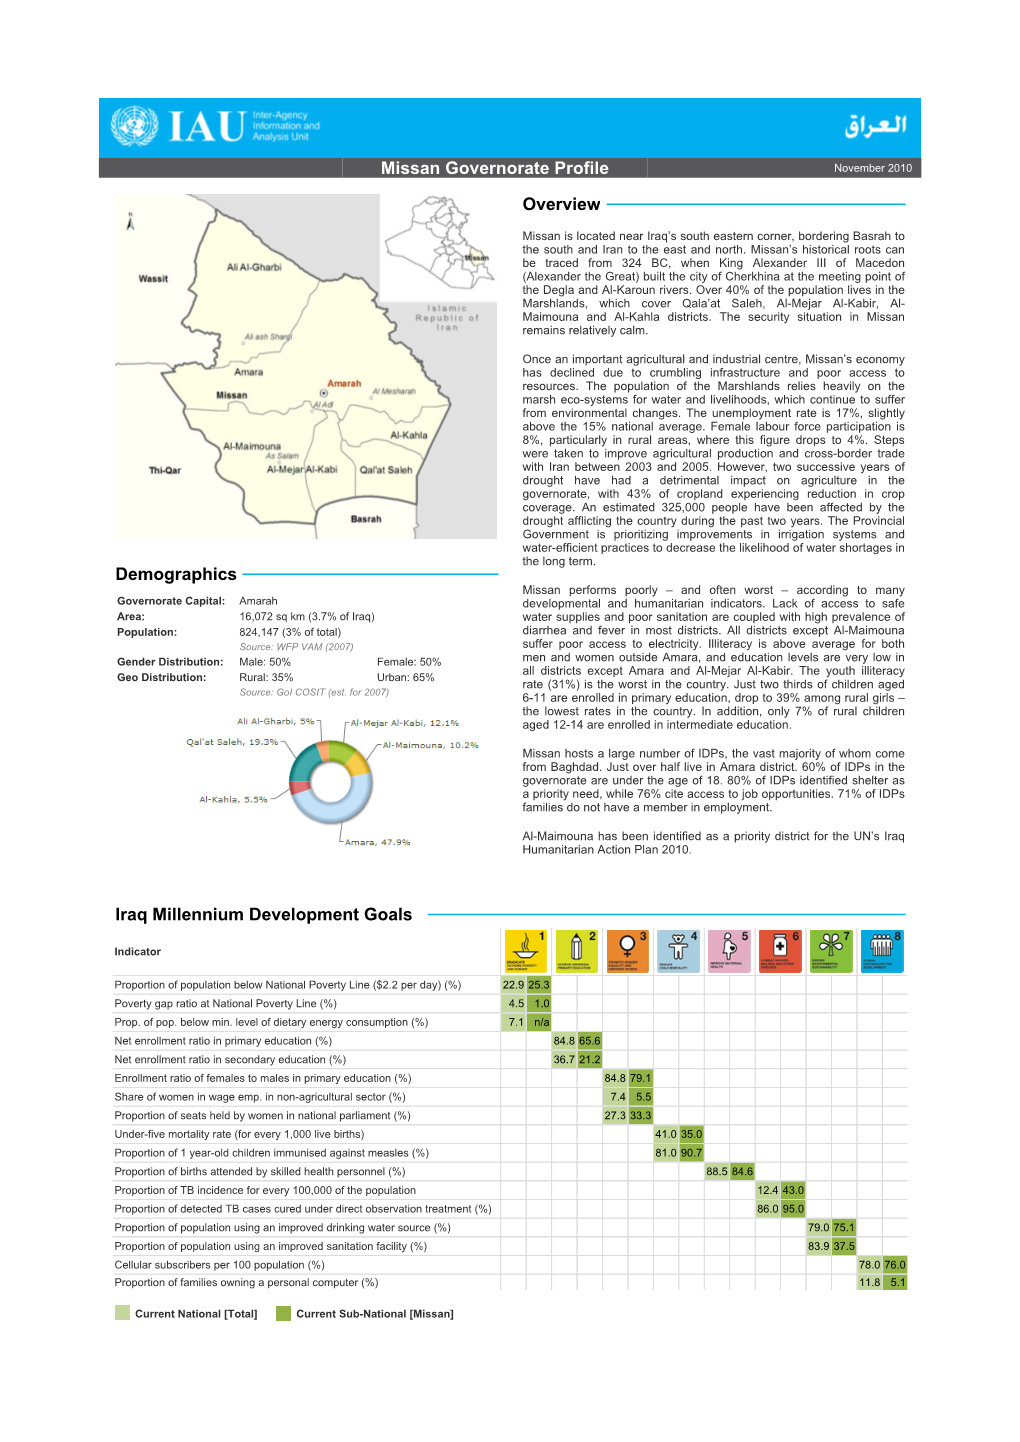 Missan Governorate Profile Overview Demographics Iraq Millennium Development Goals